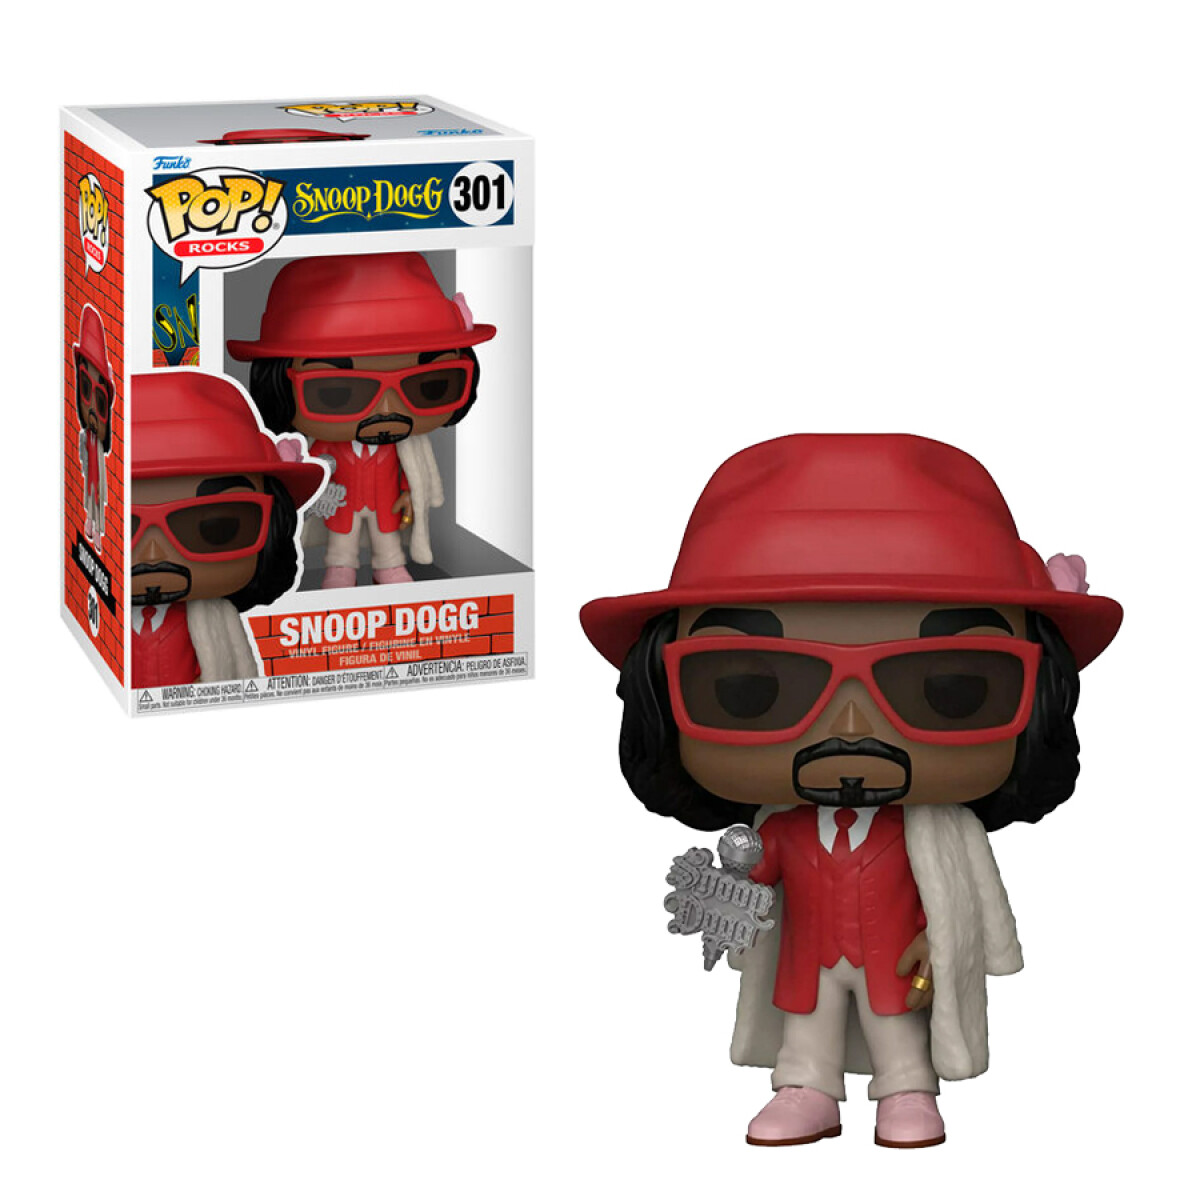 Snoop Dogg - Rocks Snoop Dogg - 301 